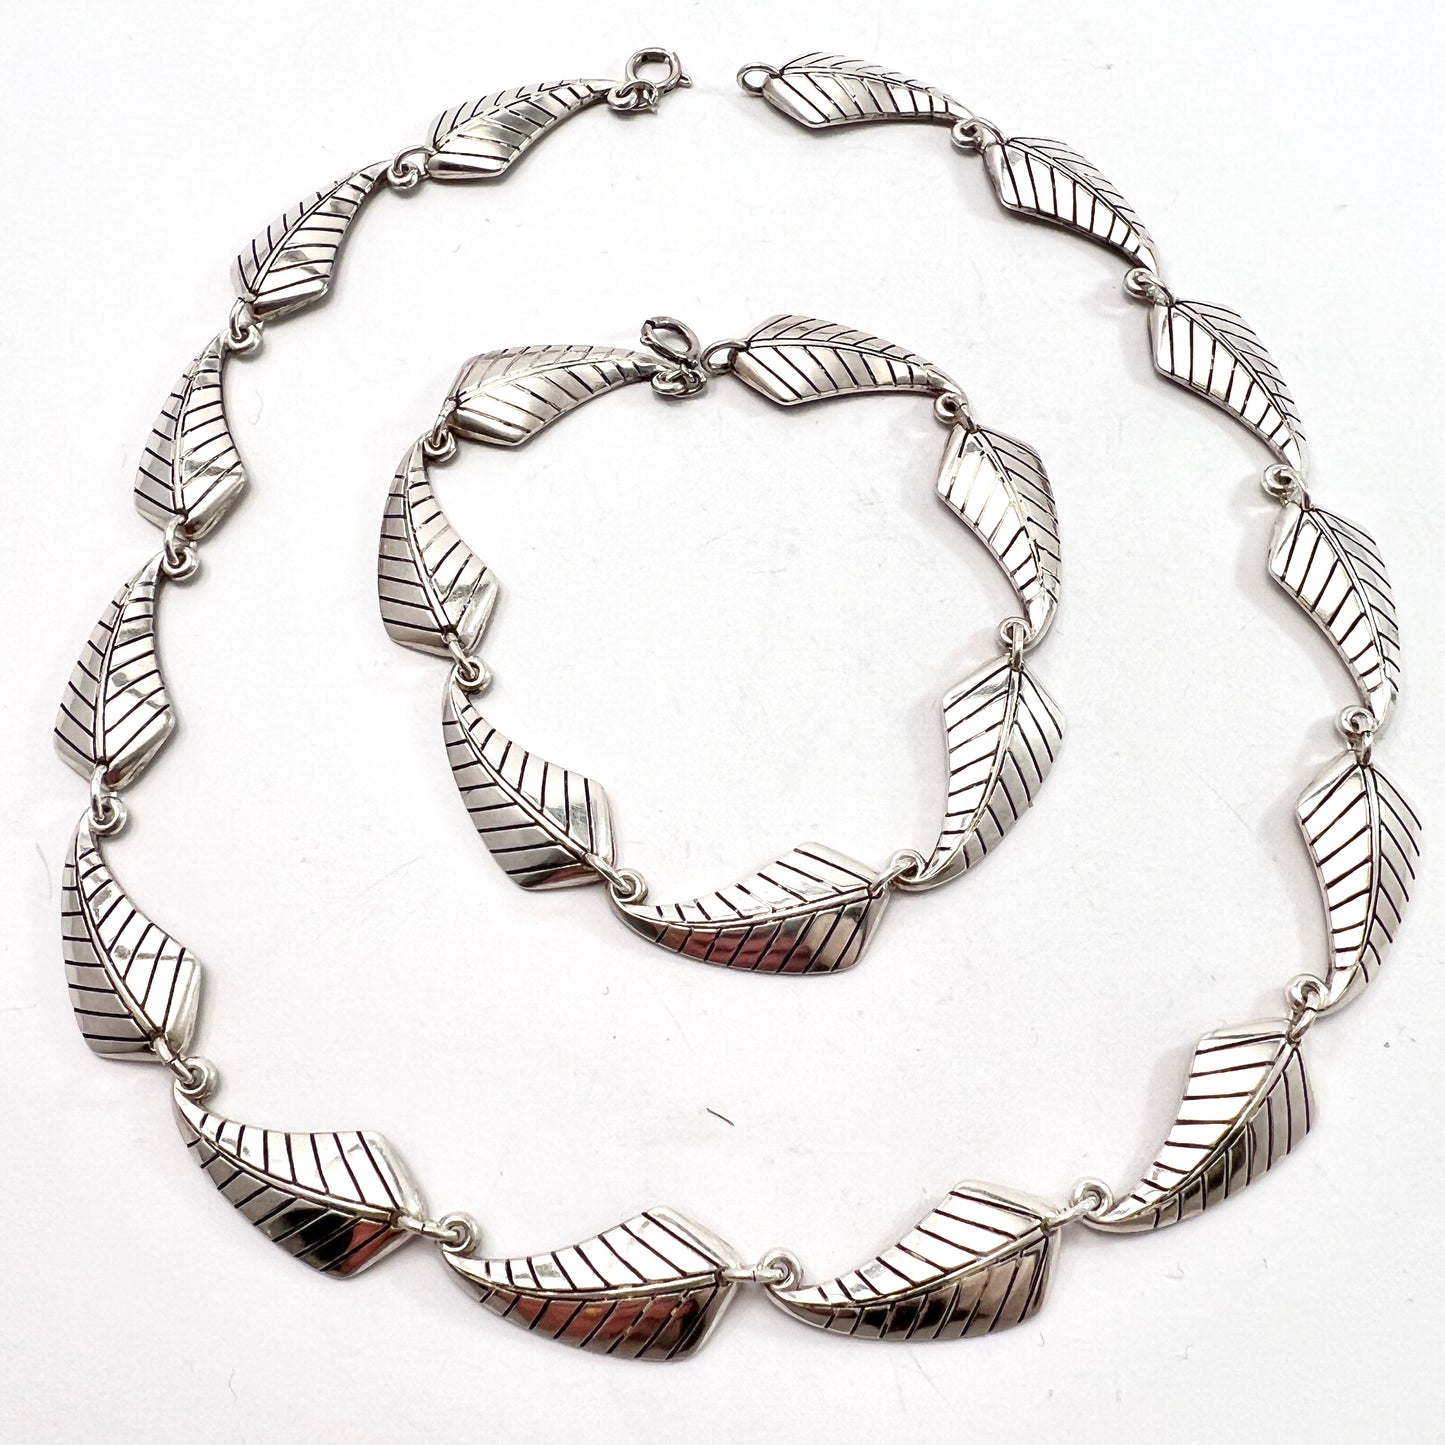 Swedish Import Germany 1960s Solid 835 Silver Leaf Bracelet and Necklace.